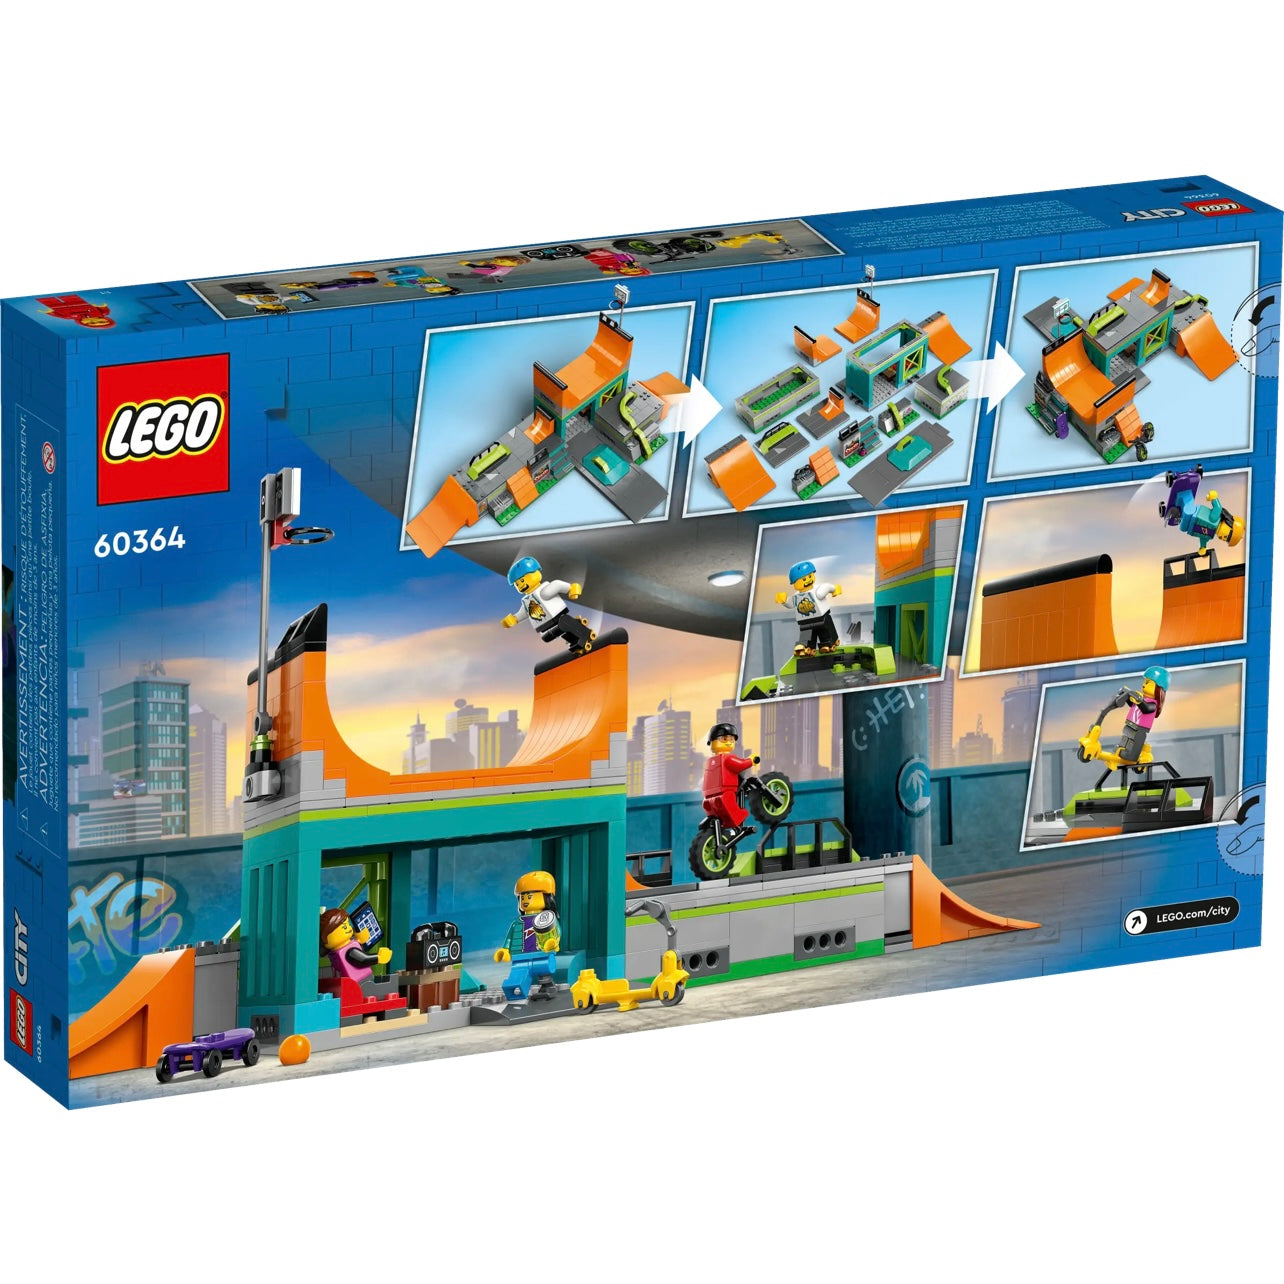 LEGO-PLANCHODROME-CITY-60364-STREET-SKATEPARK-2